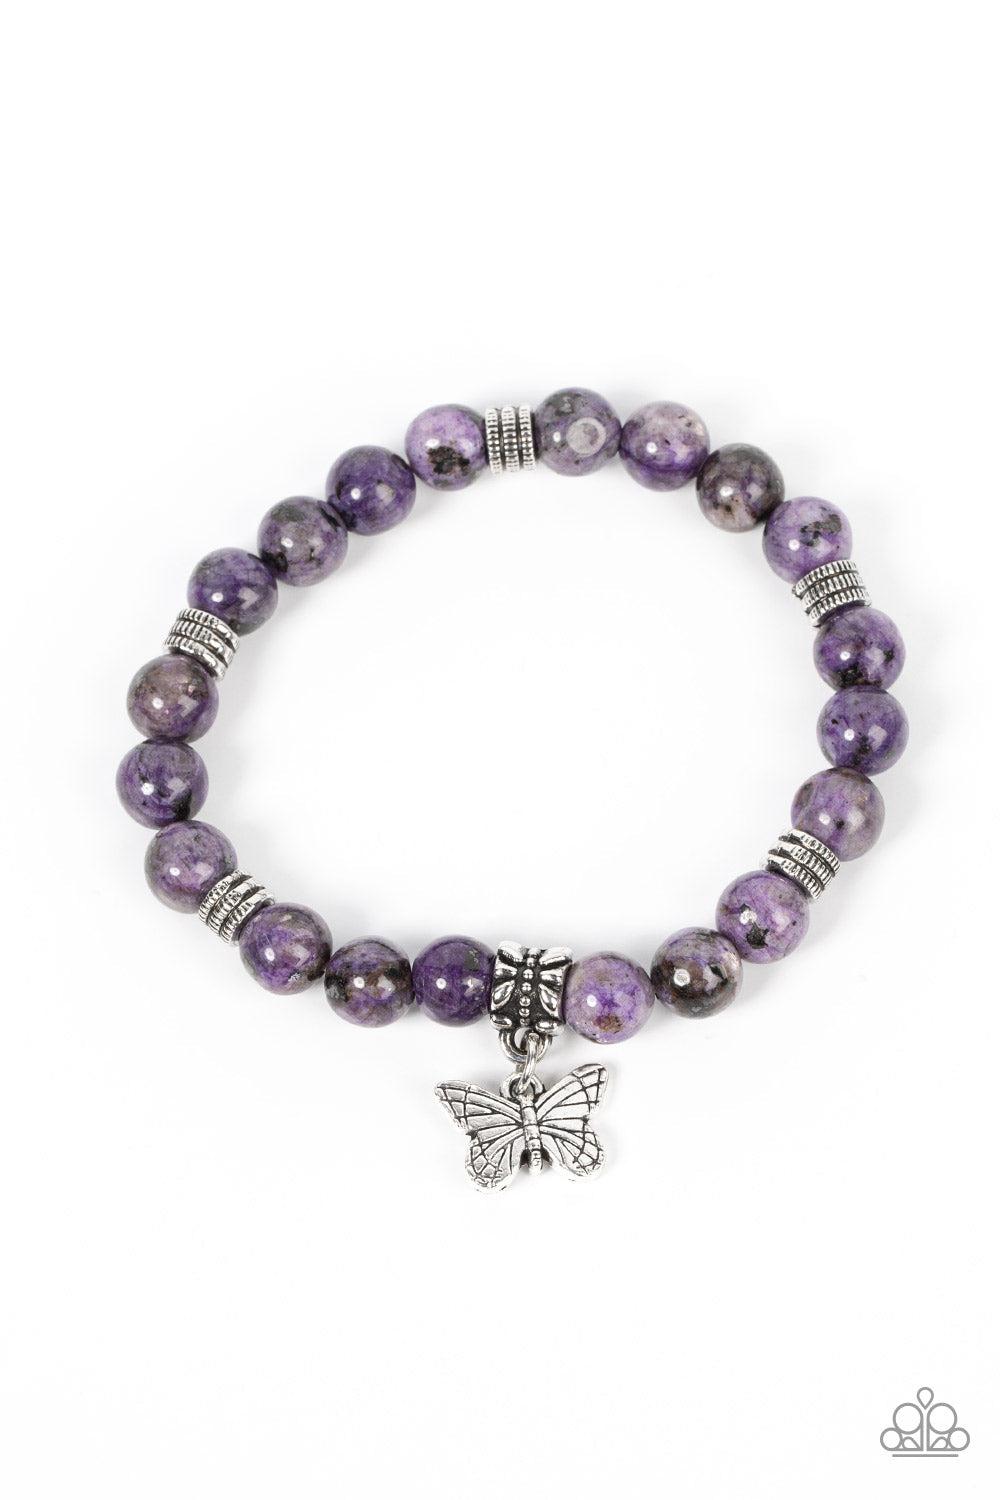 Butterfly Nirvana Purple Stone Bracelet - Paparazzi Accessories- lightbox - CarasShop.com - $5 Jewelry by Cara Jewels